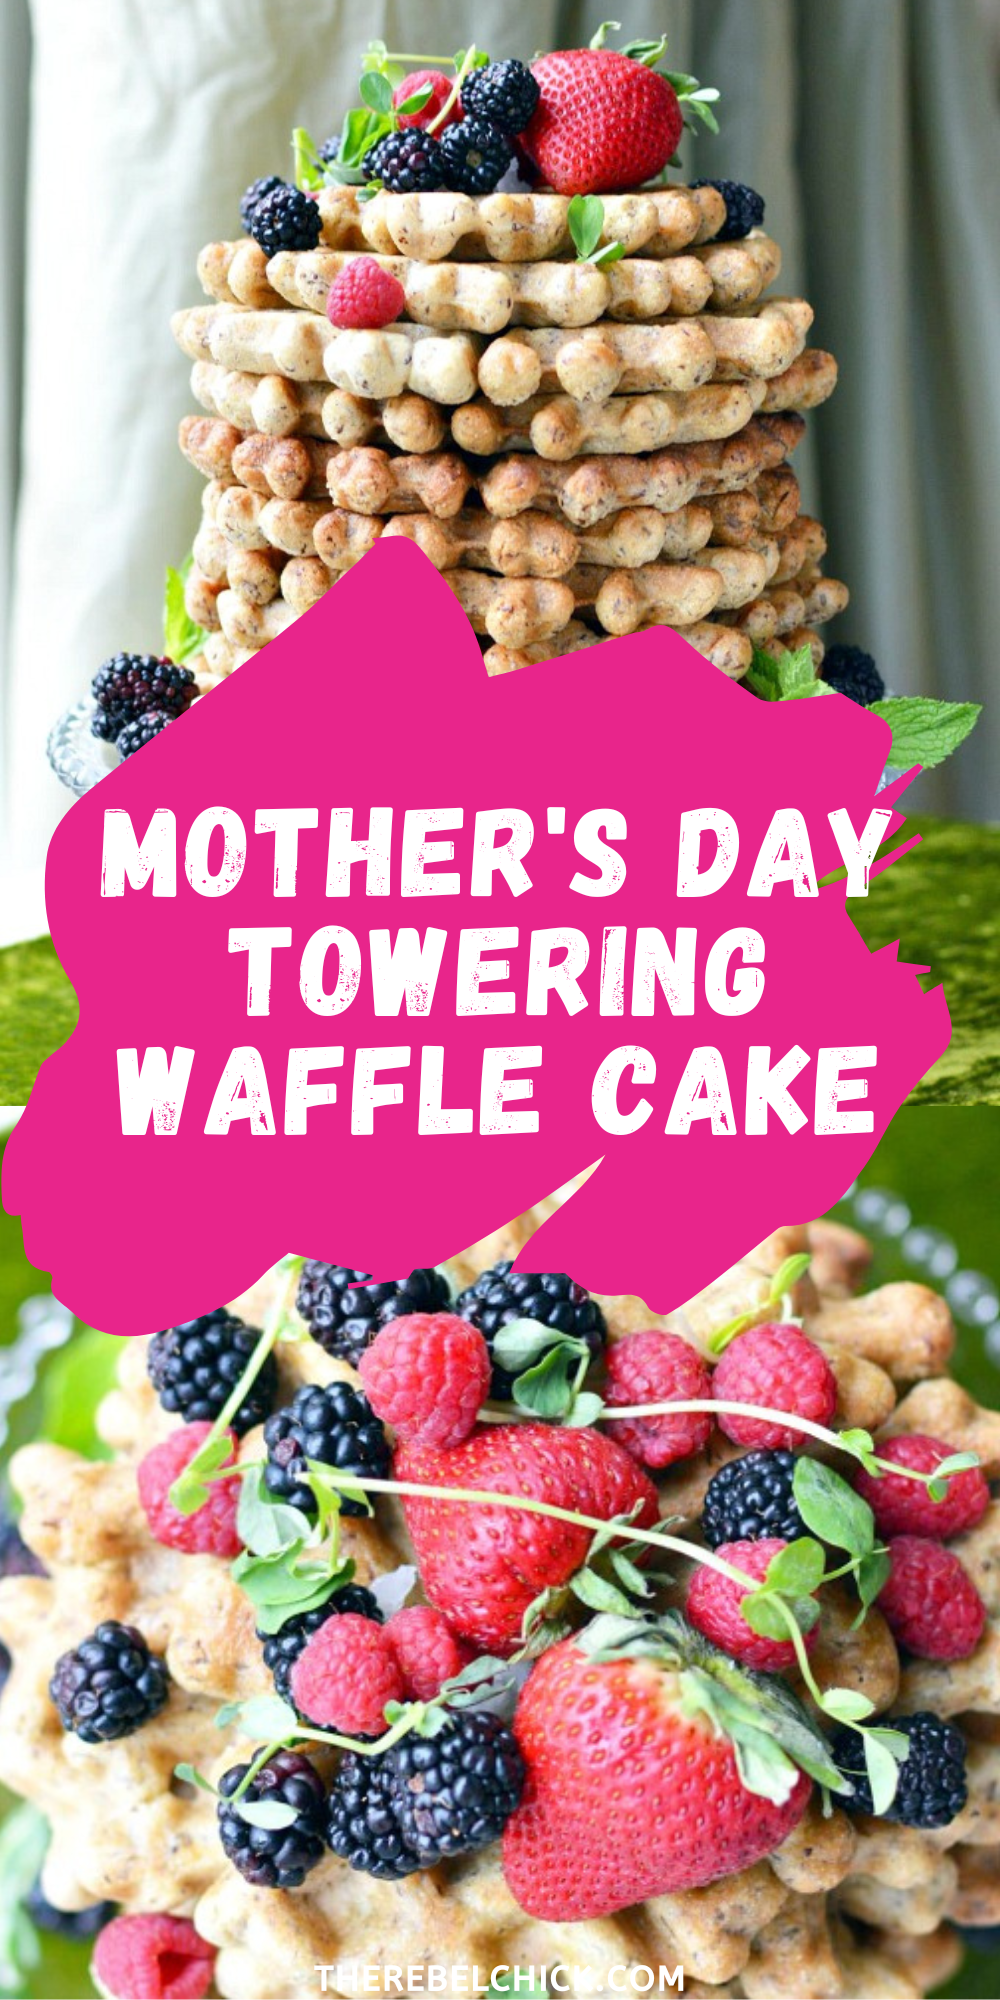 Towering Waffle Cake